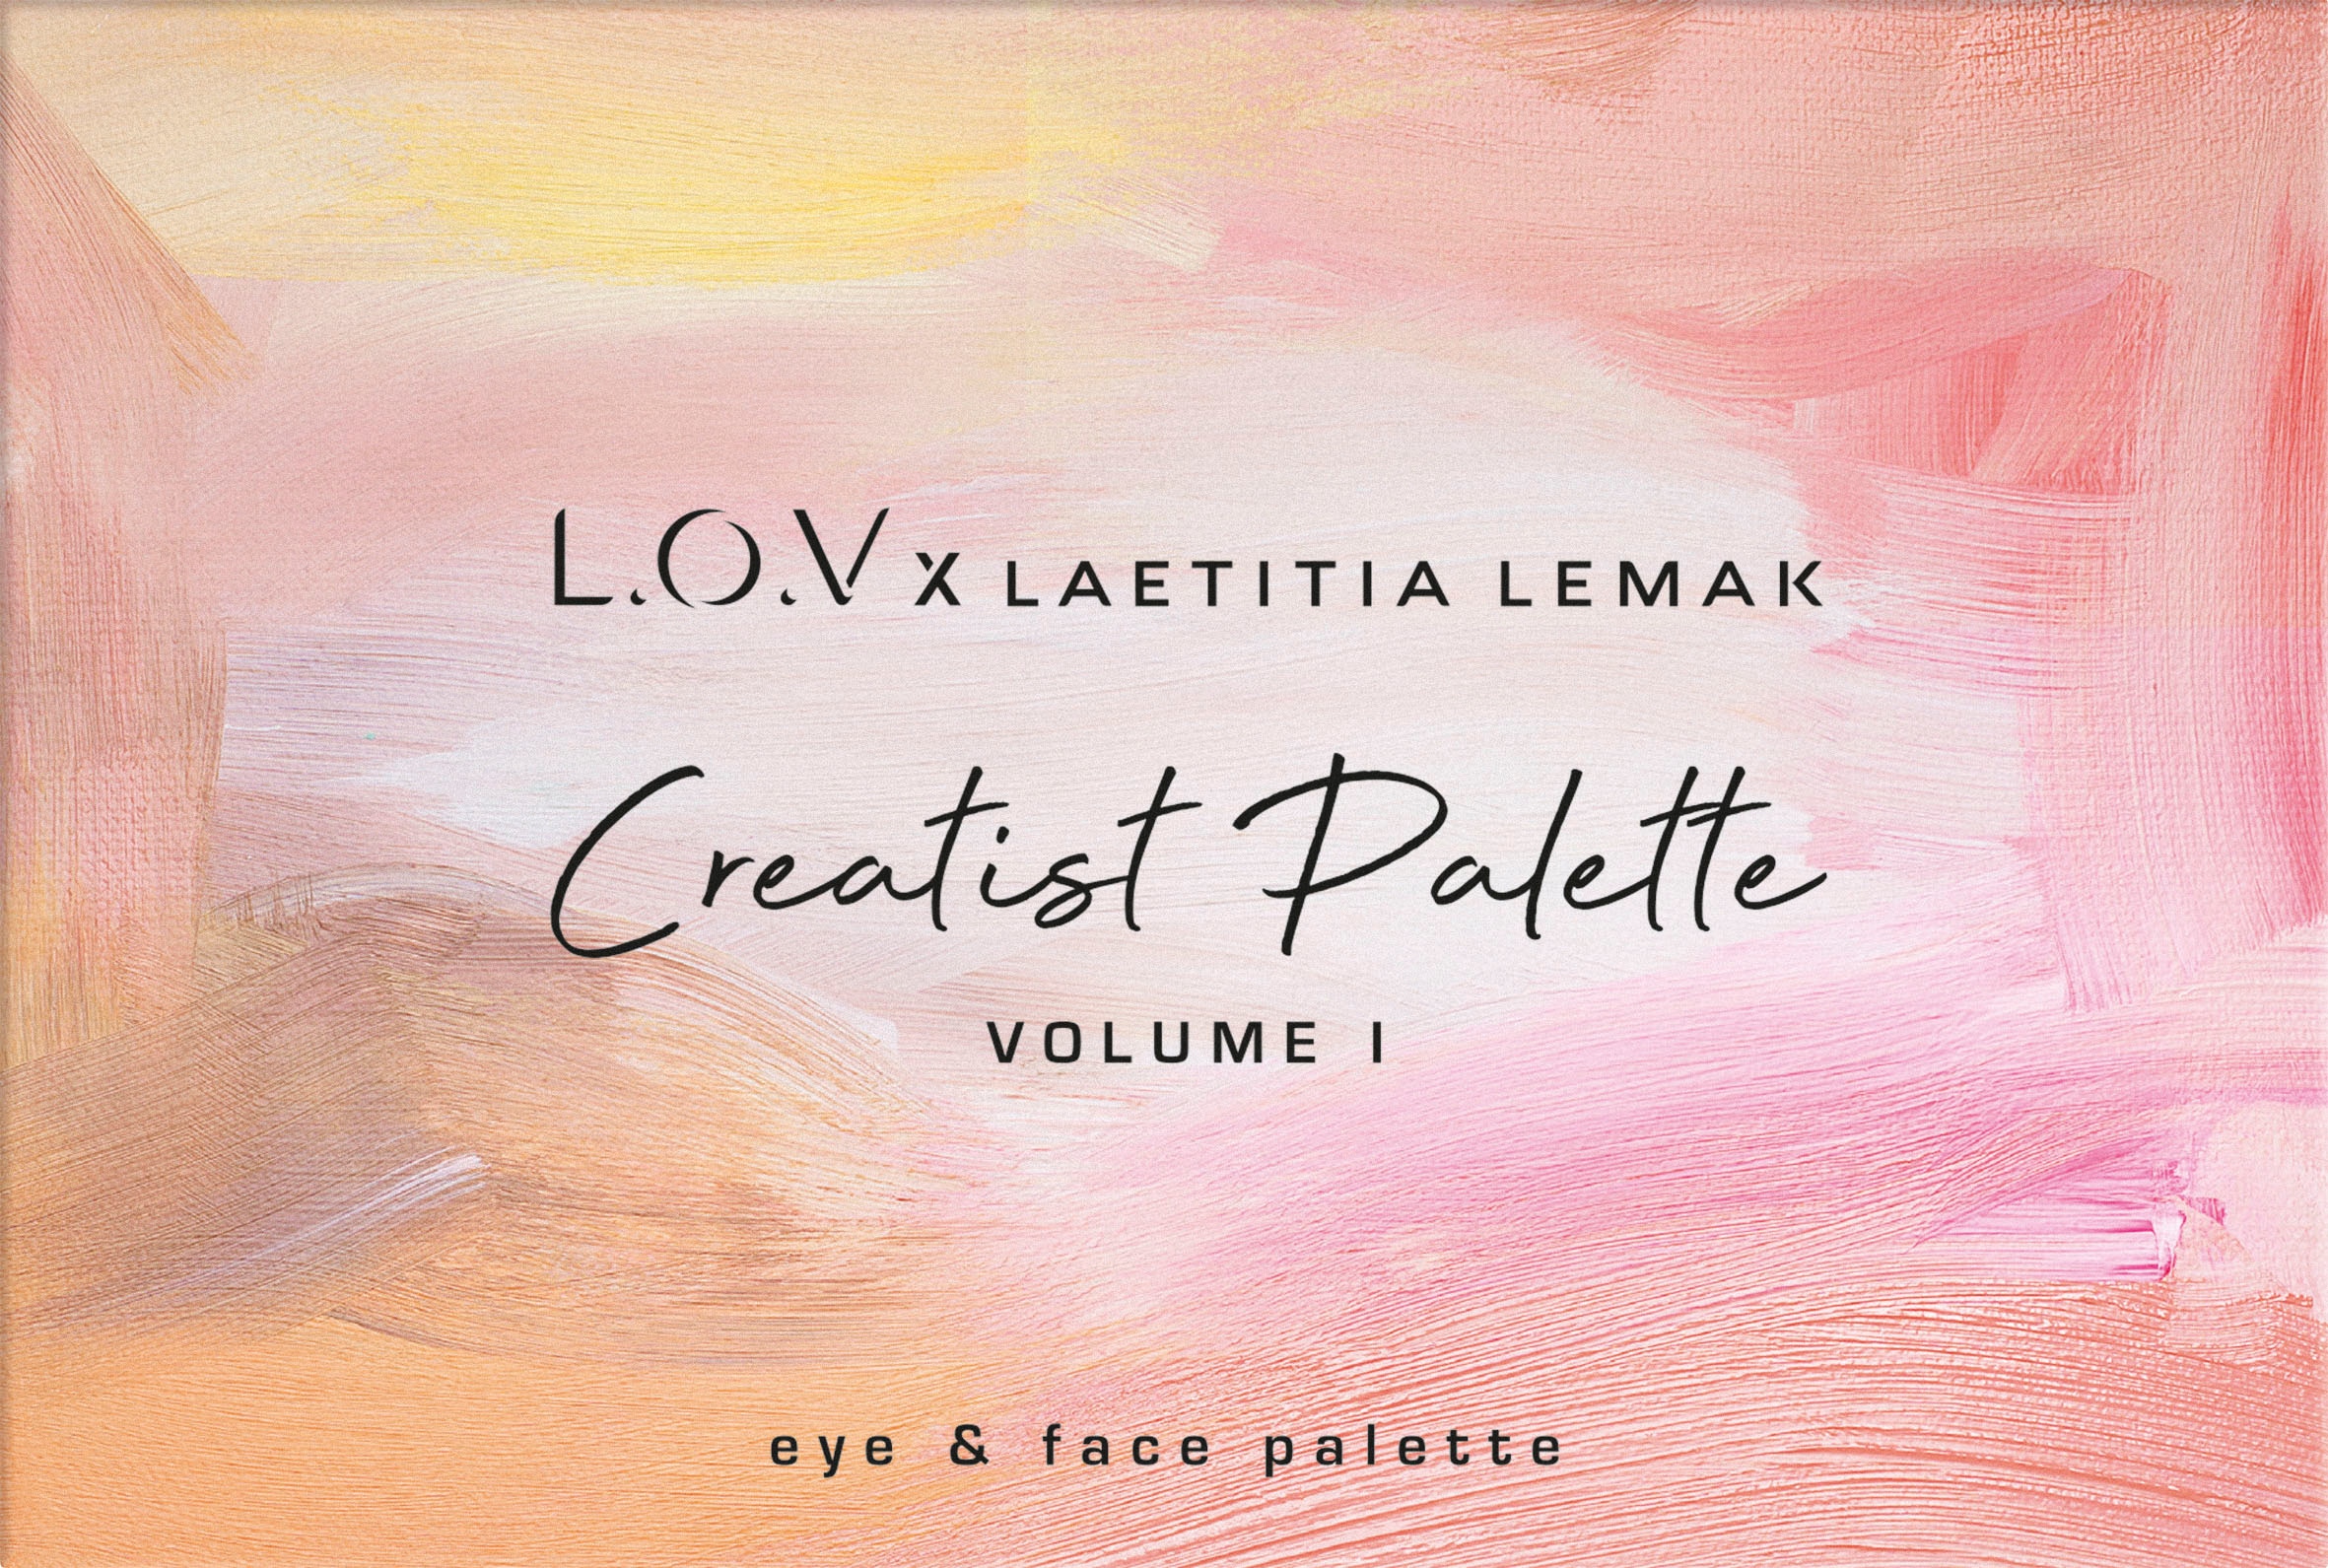 L.O.V Lidschatten-Palette palette« bei »L.O.V & x I LAETITIA eye CREATIST OTTO Volume LEMAK kaufen PALETTE face